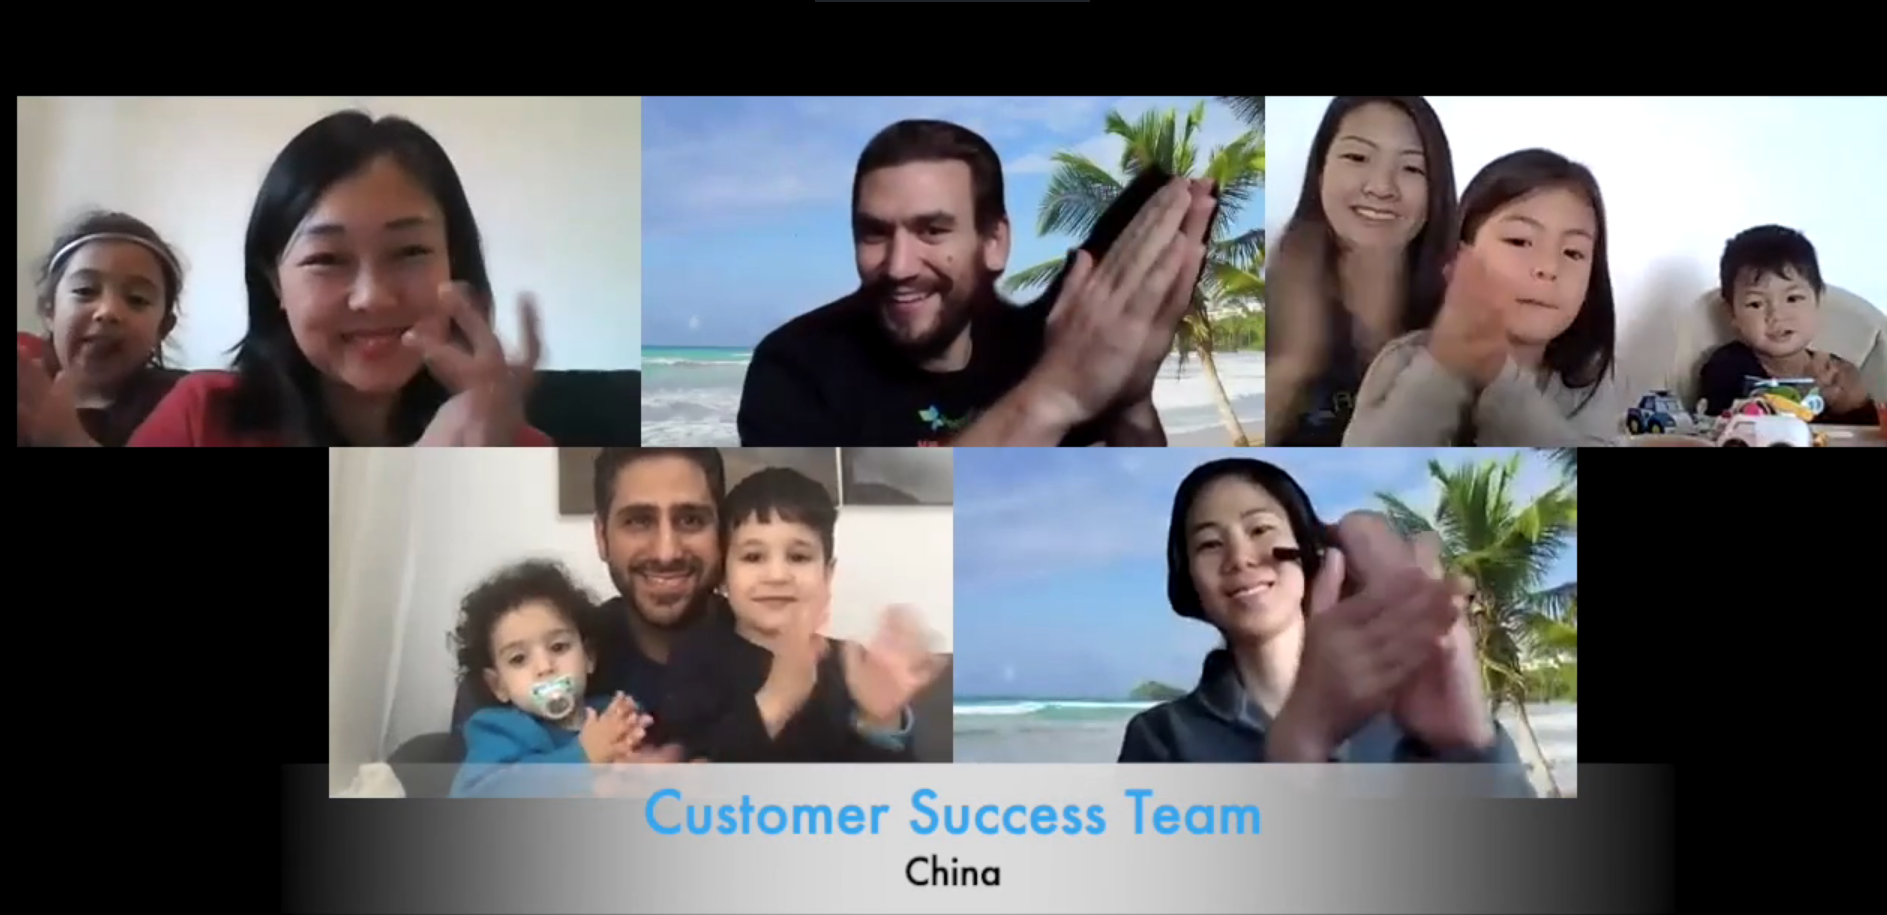 Appsflyer China Customer Success Team